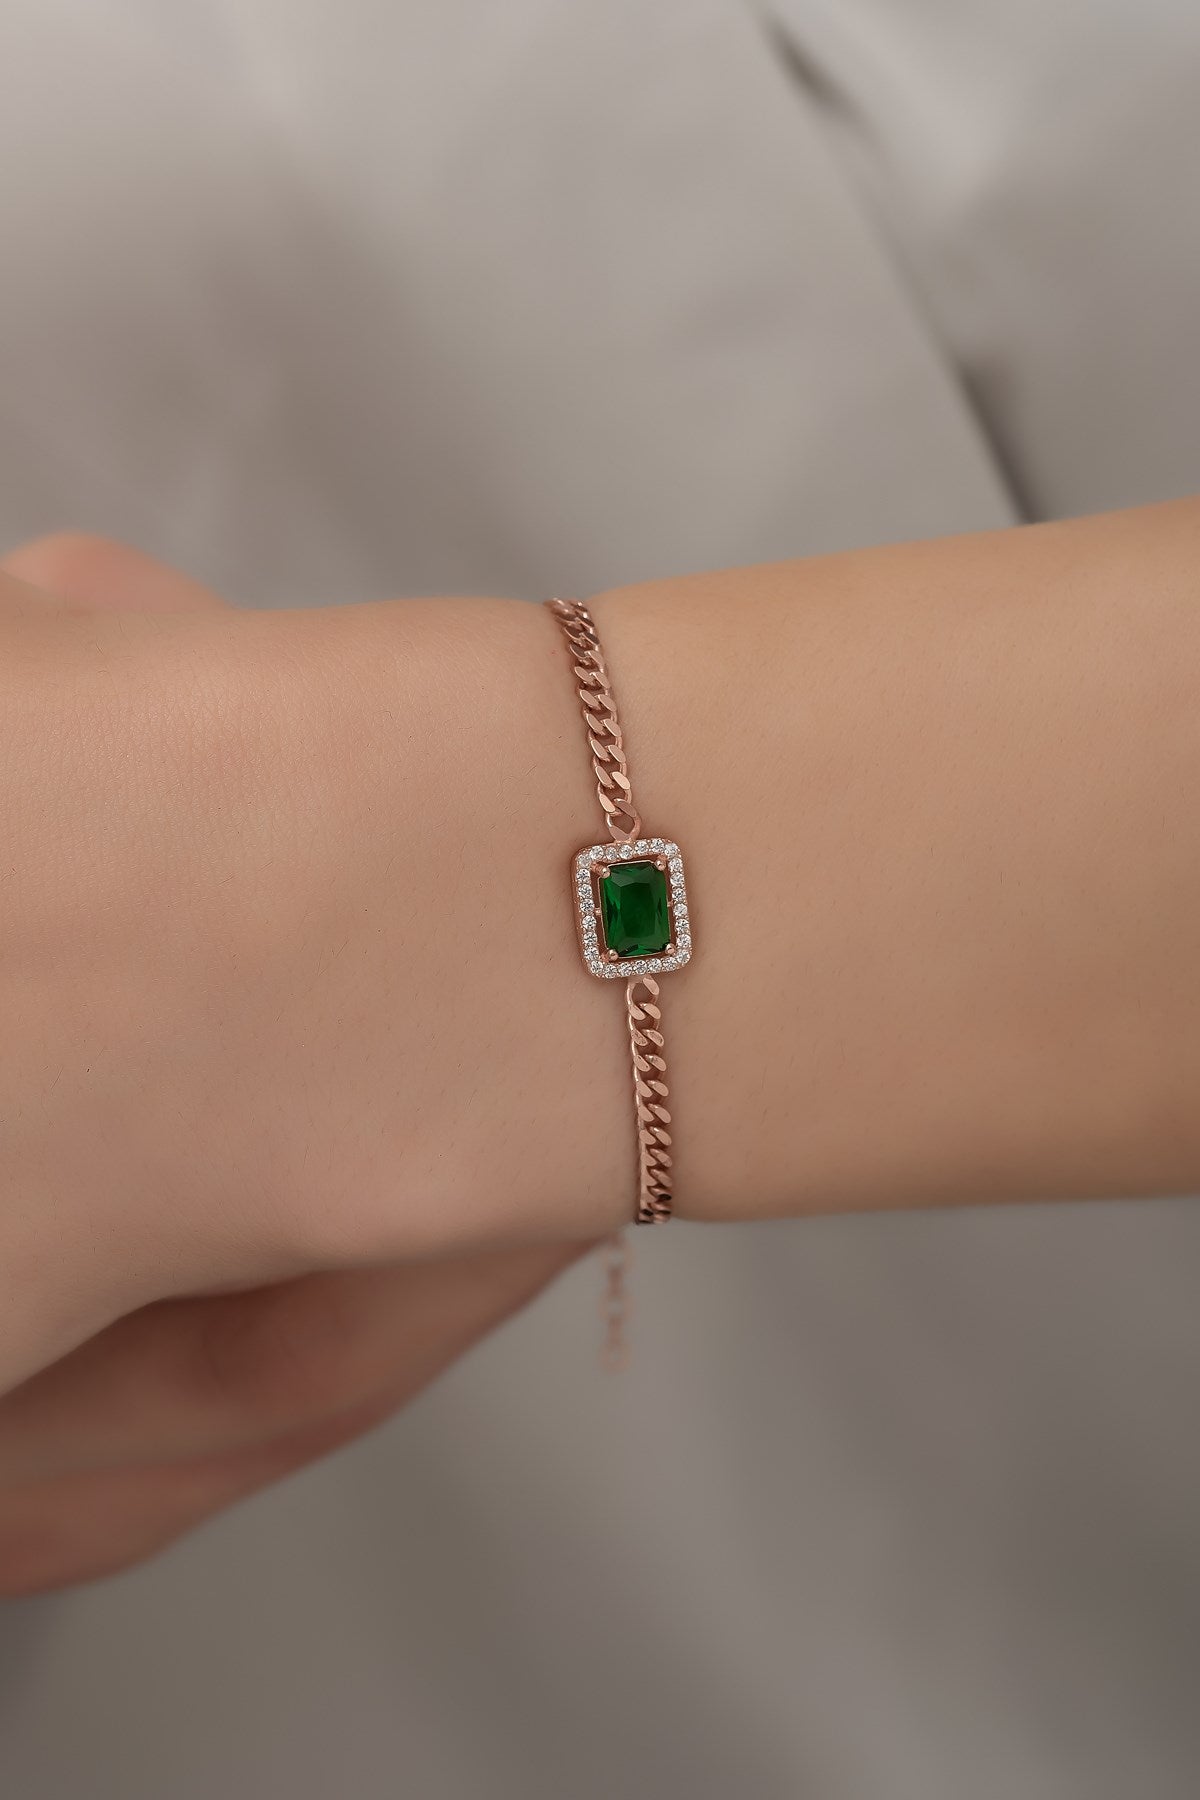 Gourmet Chain Green Stone Bracelet